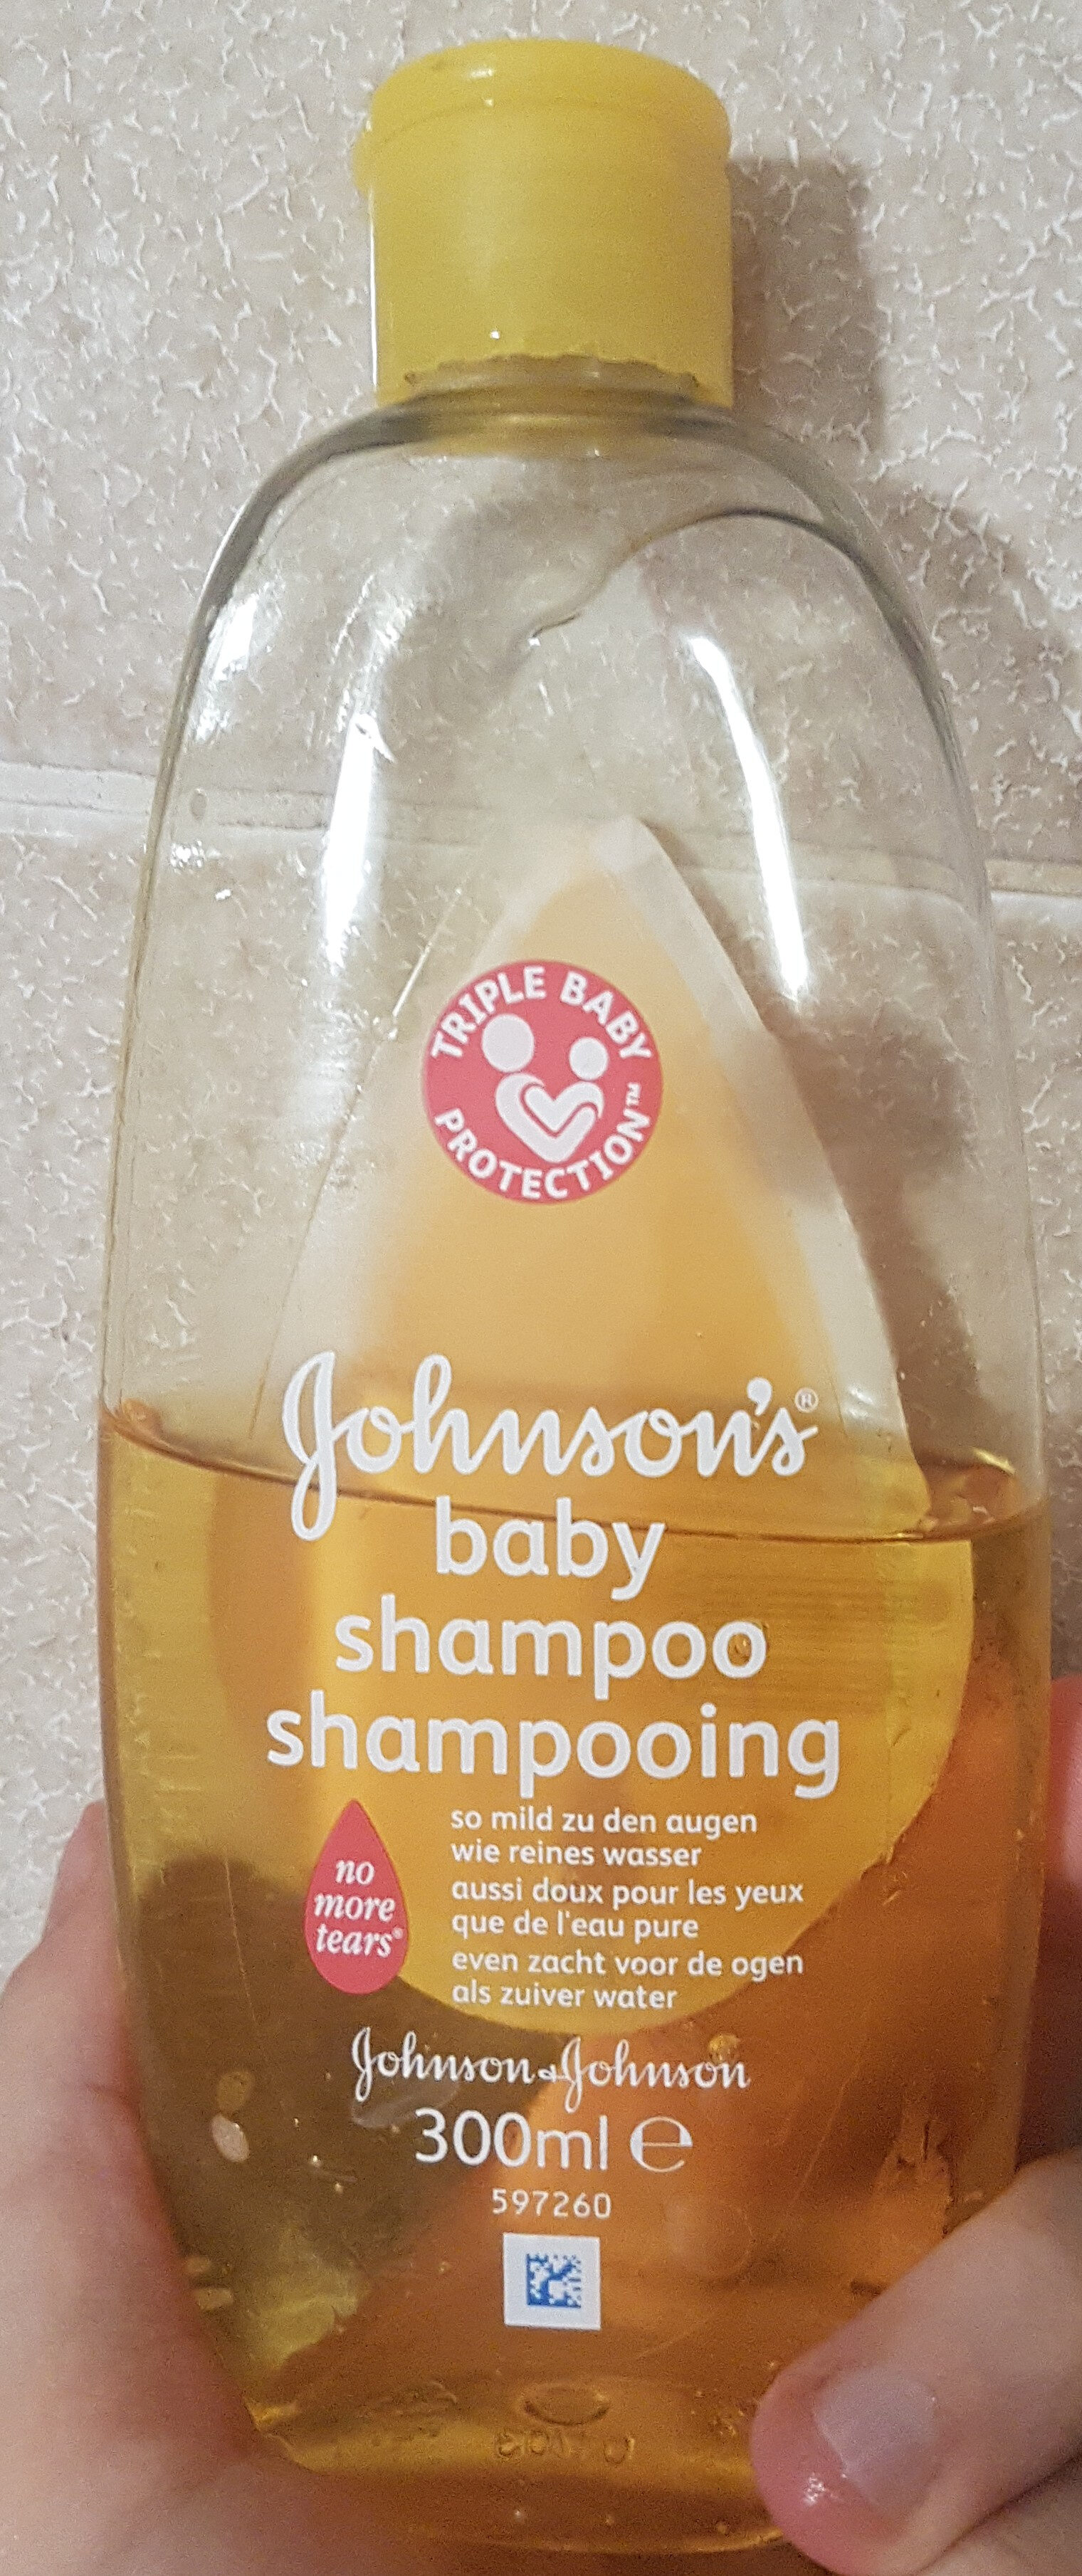 baby shampoo shampooing - Tuote - en